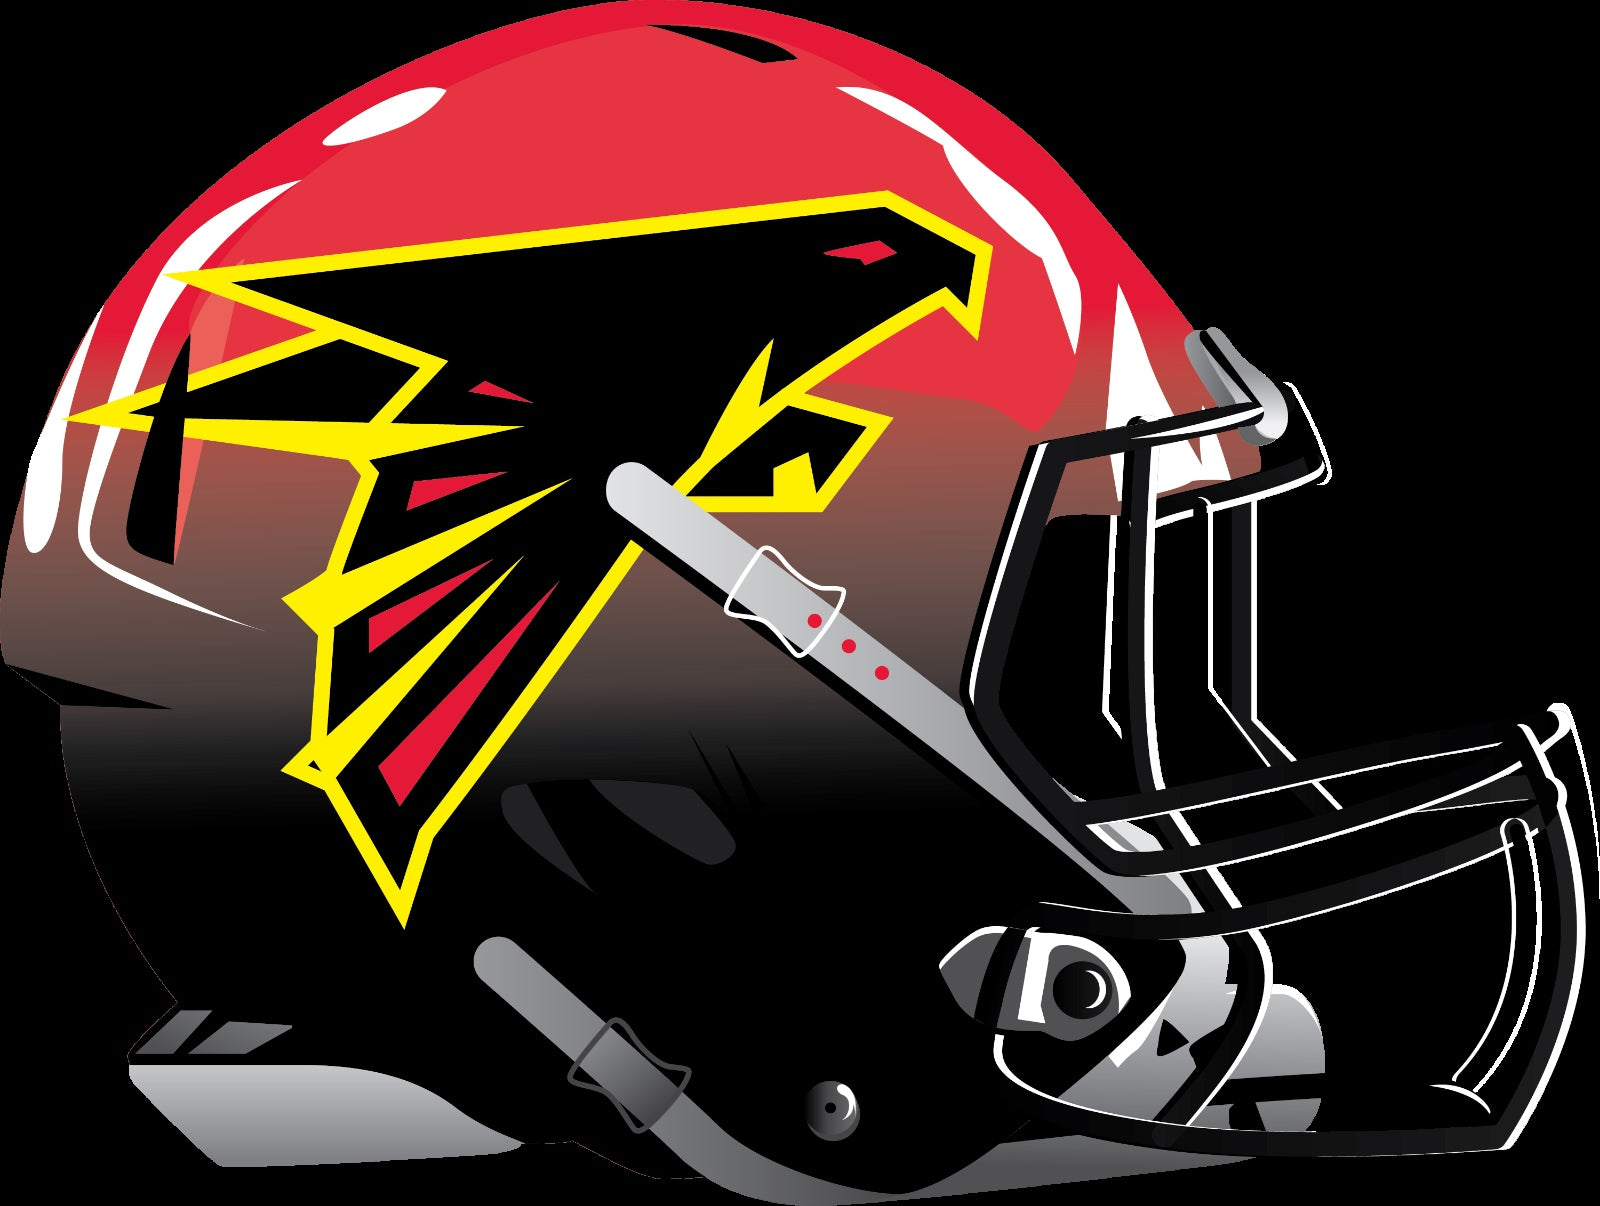 Atlanta Falcons Alternate Future Helmet logo Vinyl Decal / Sticker 5 s